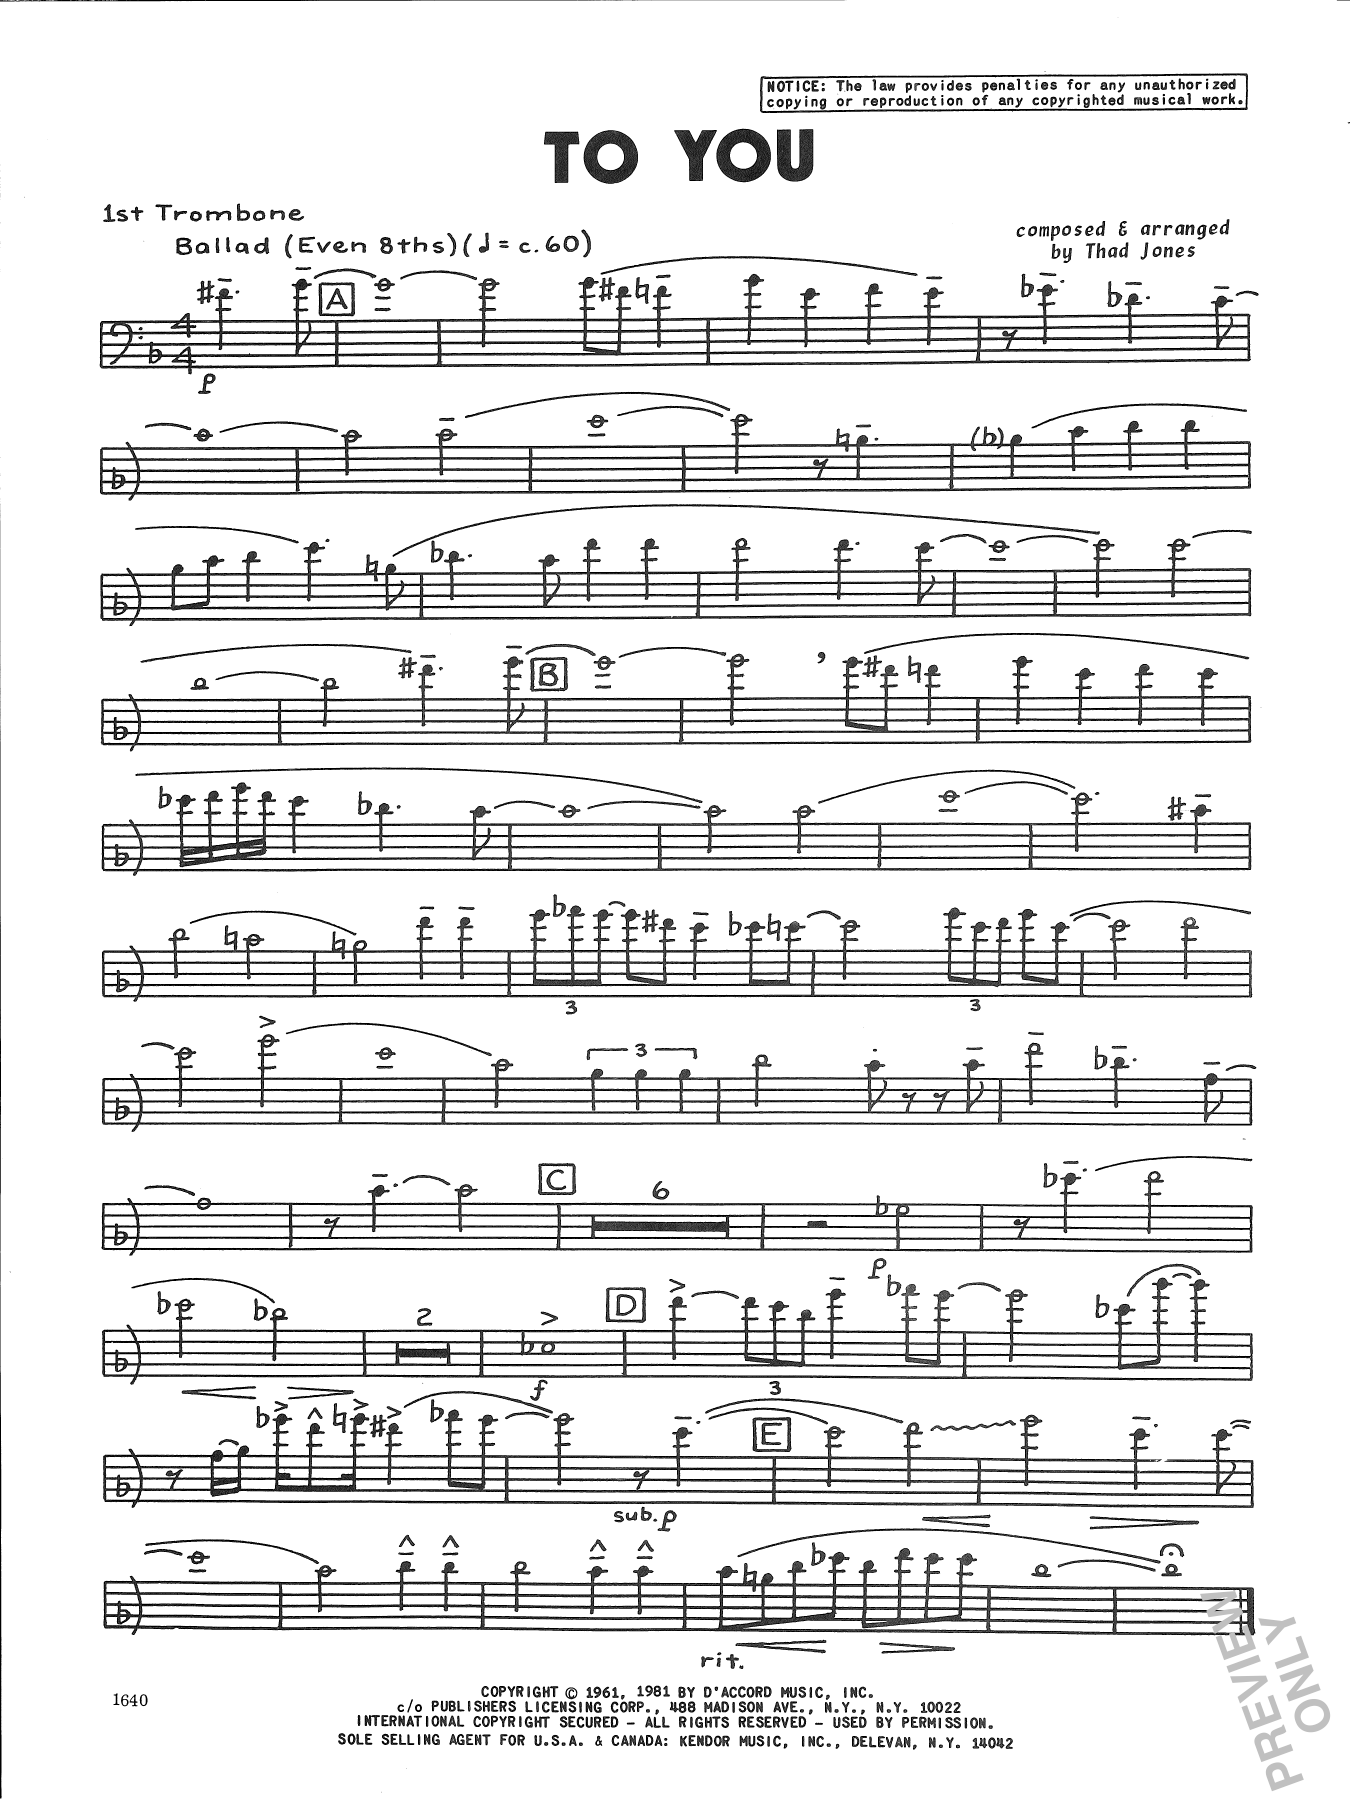 Download Thad Jones To You - 1st Trombone Sheet Music